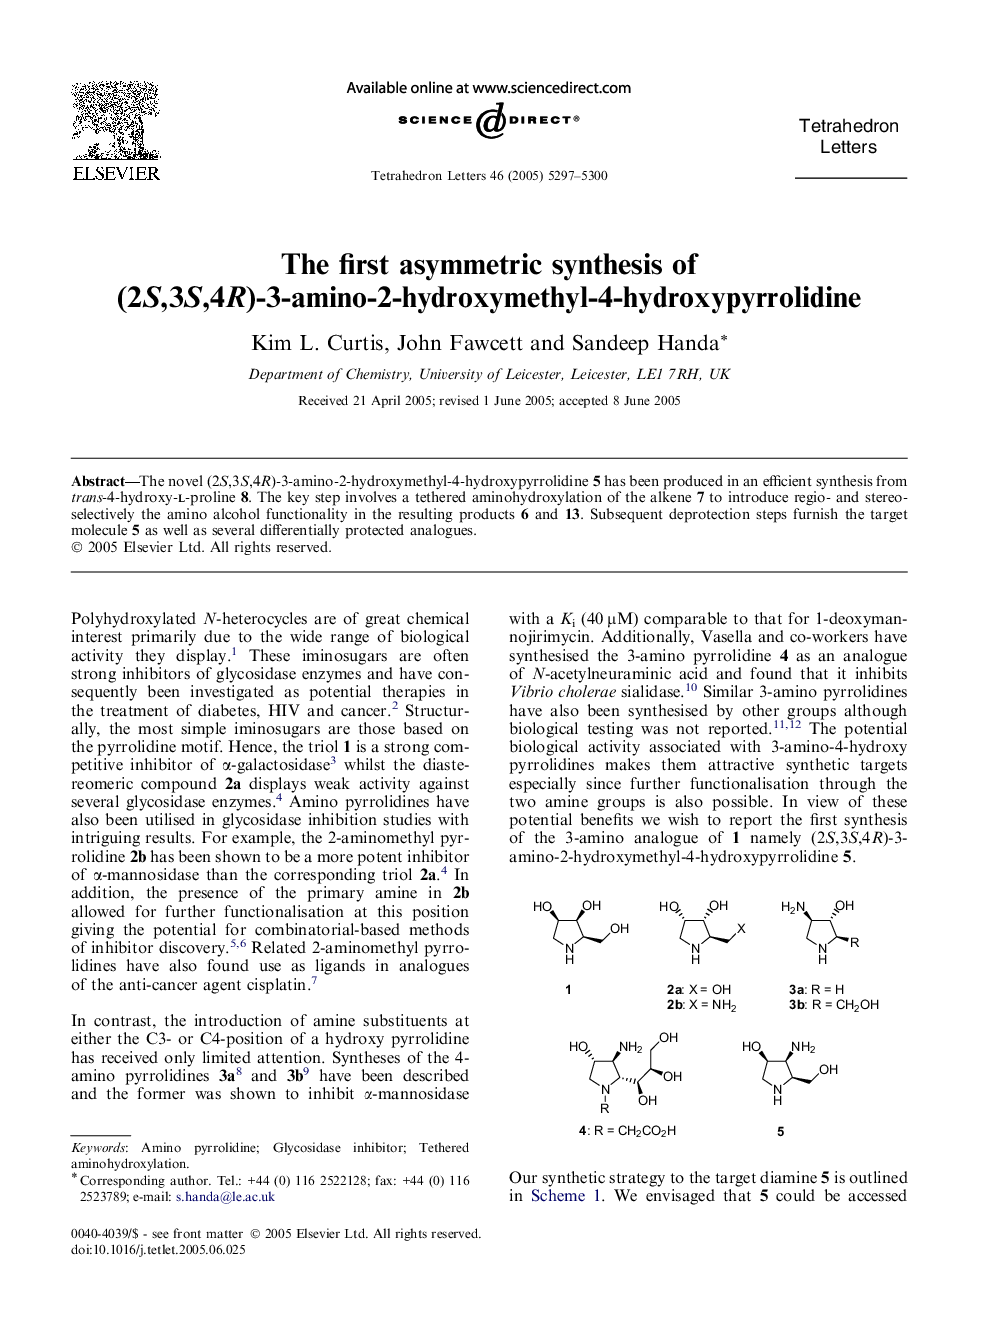 The first asymmetric synthesis of (2S,3S,4R)-3-amino-2-hydroxymethyl-4-hydroxypyrrolidine